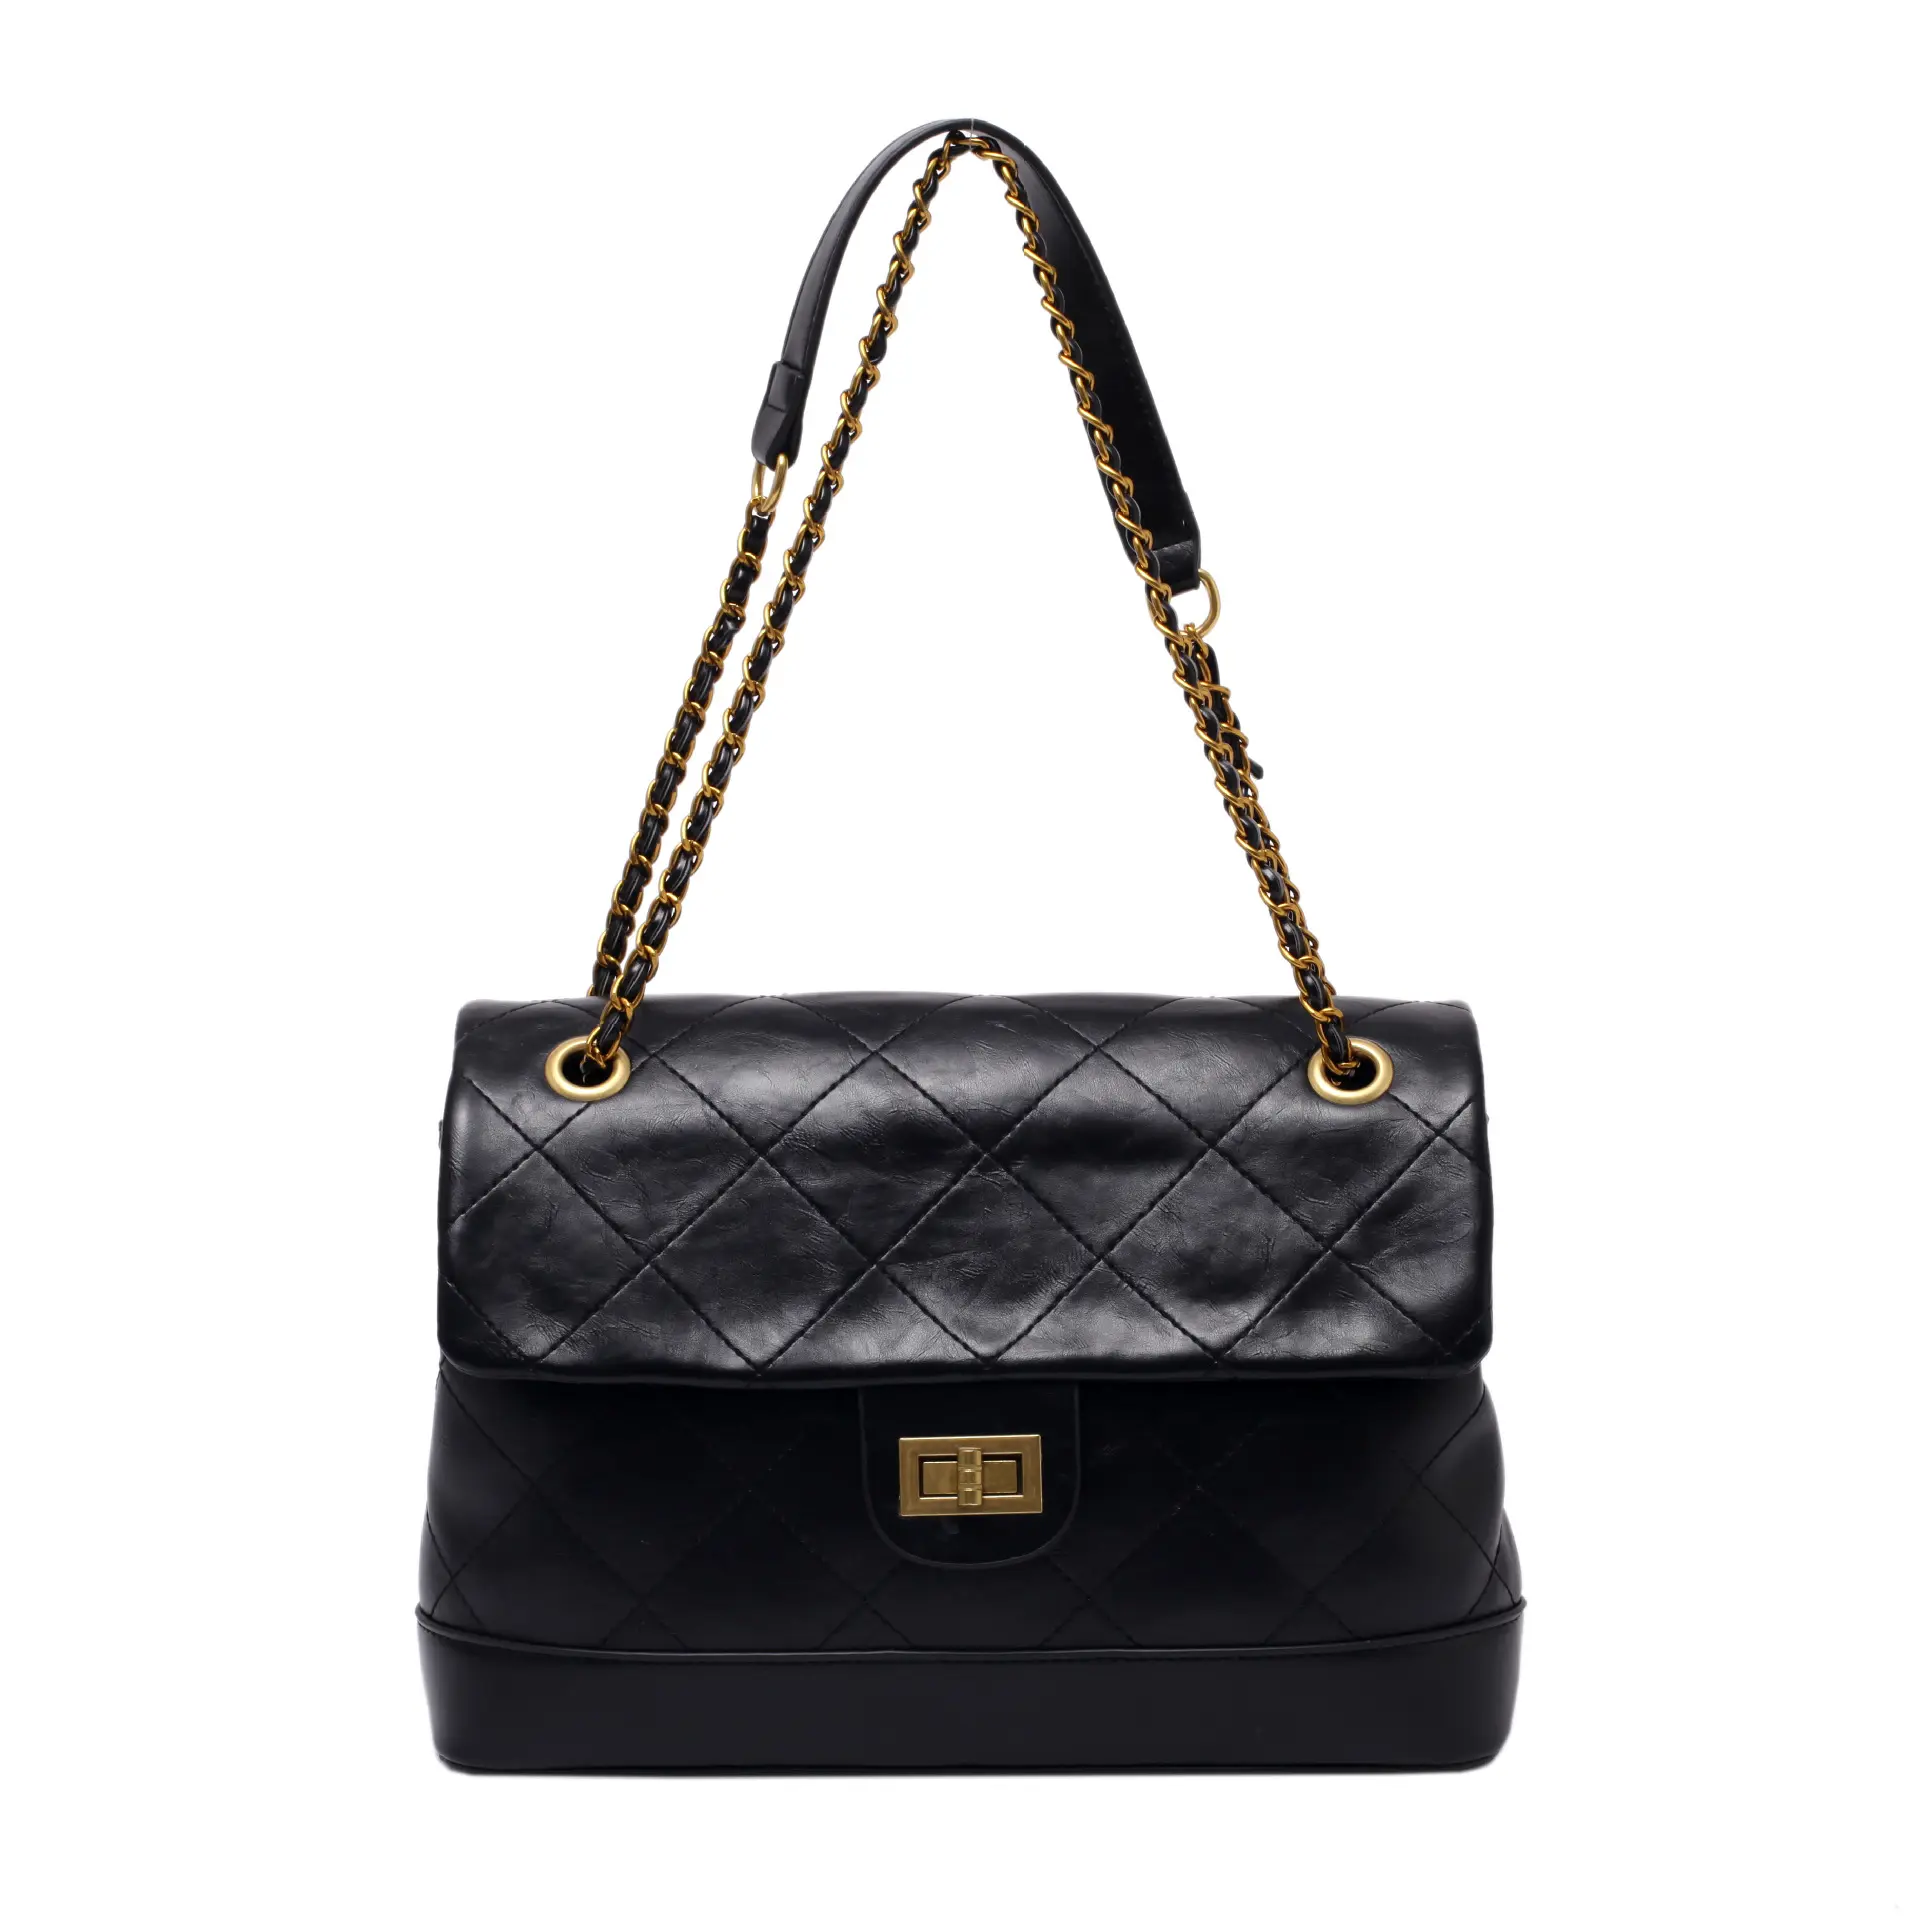 Fashion women hand bags luxury designer handbags famous brands leather cross body bags women handbags for shopping